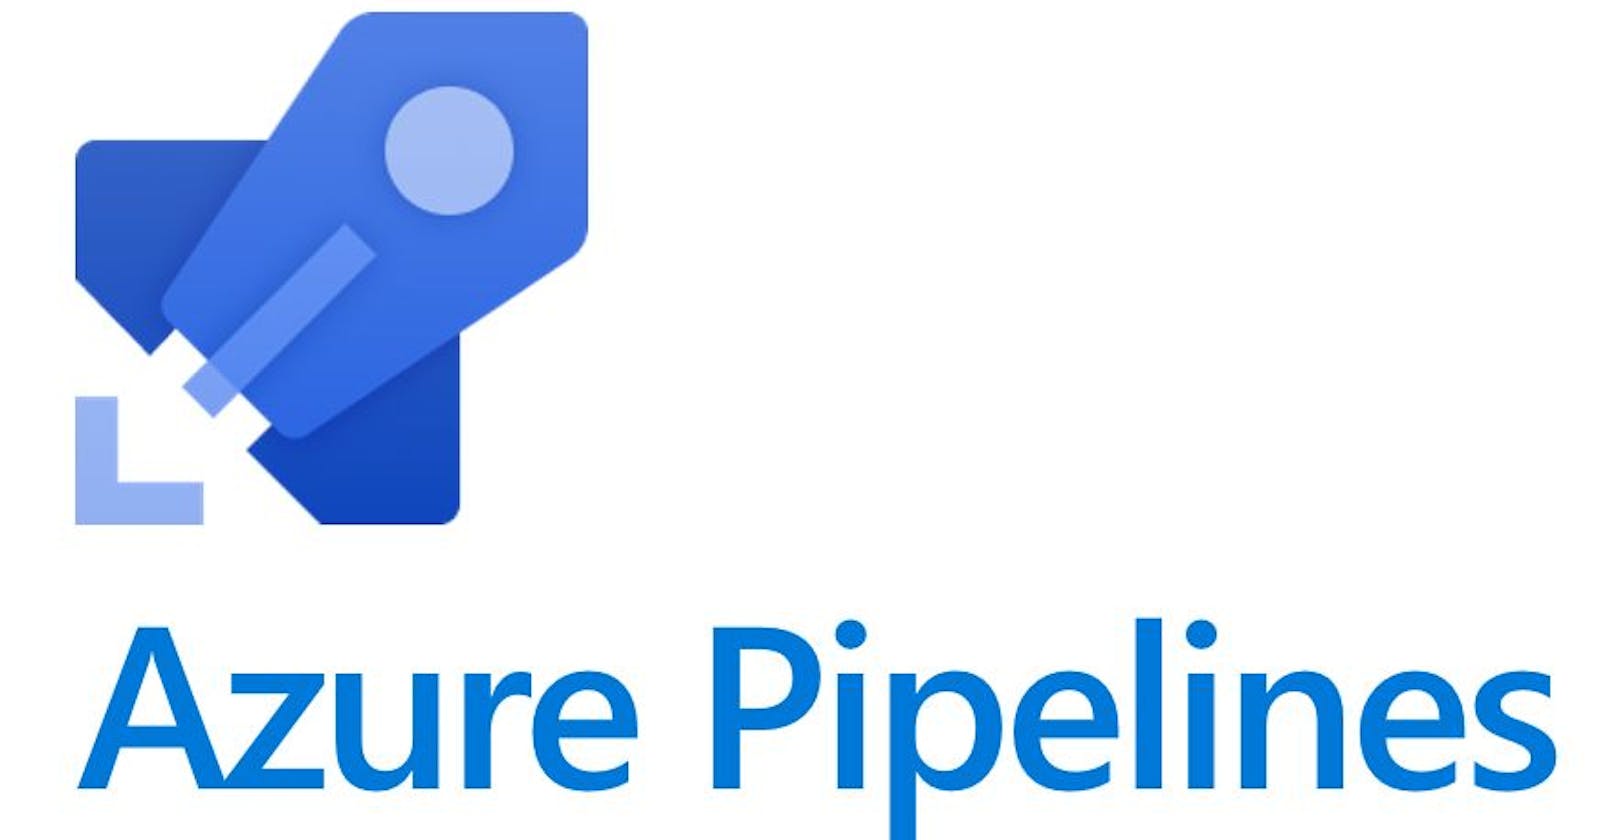 Automating Azure DevOps Release Pipeline Creation